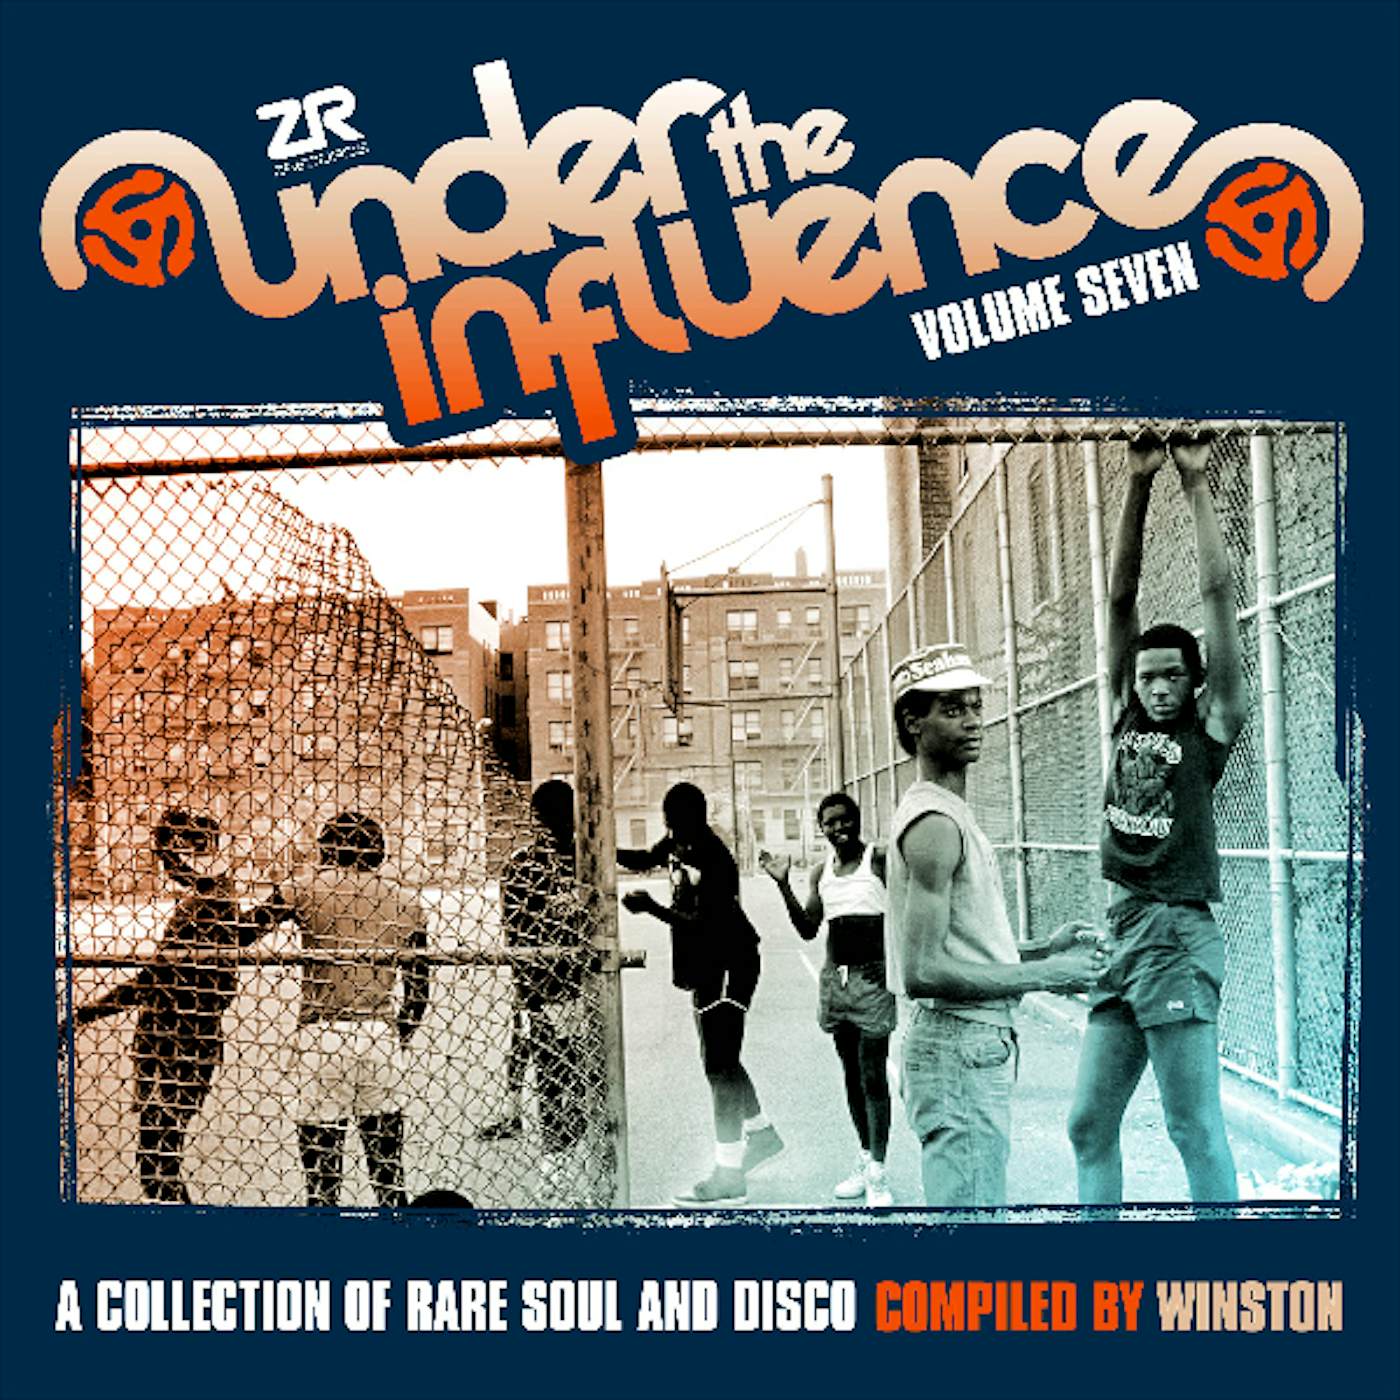 Winston UNDER THE INFLUENCE VOLUME SEVEN CD